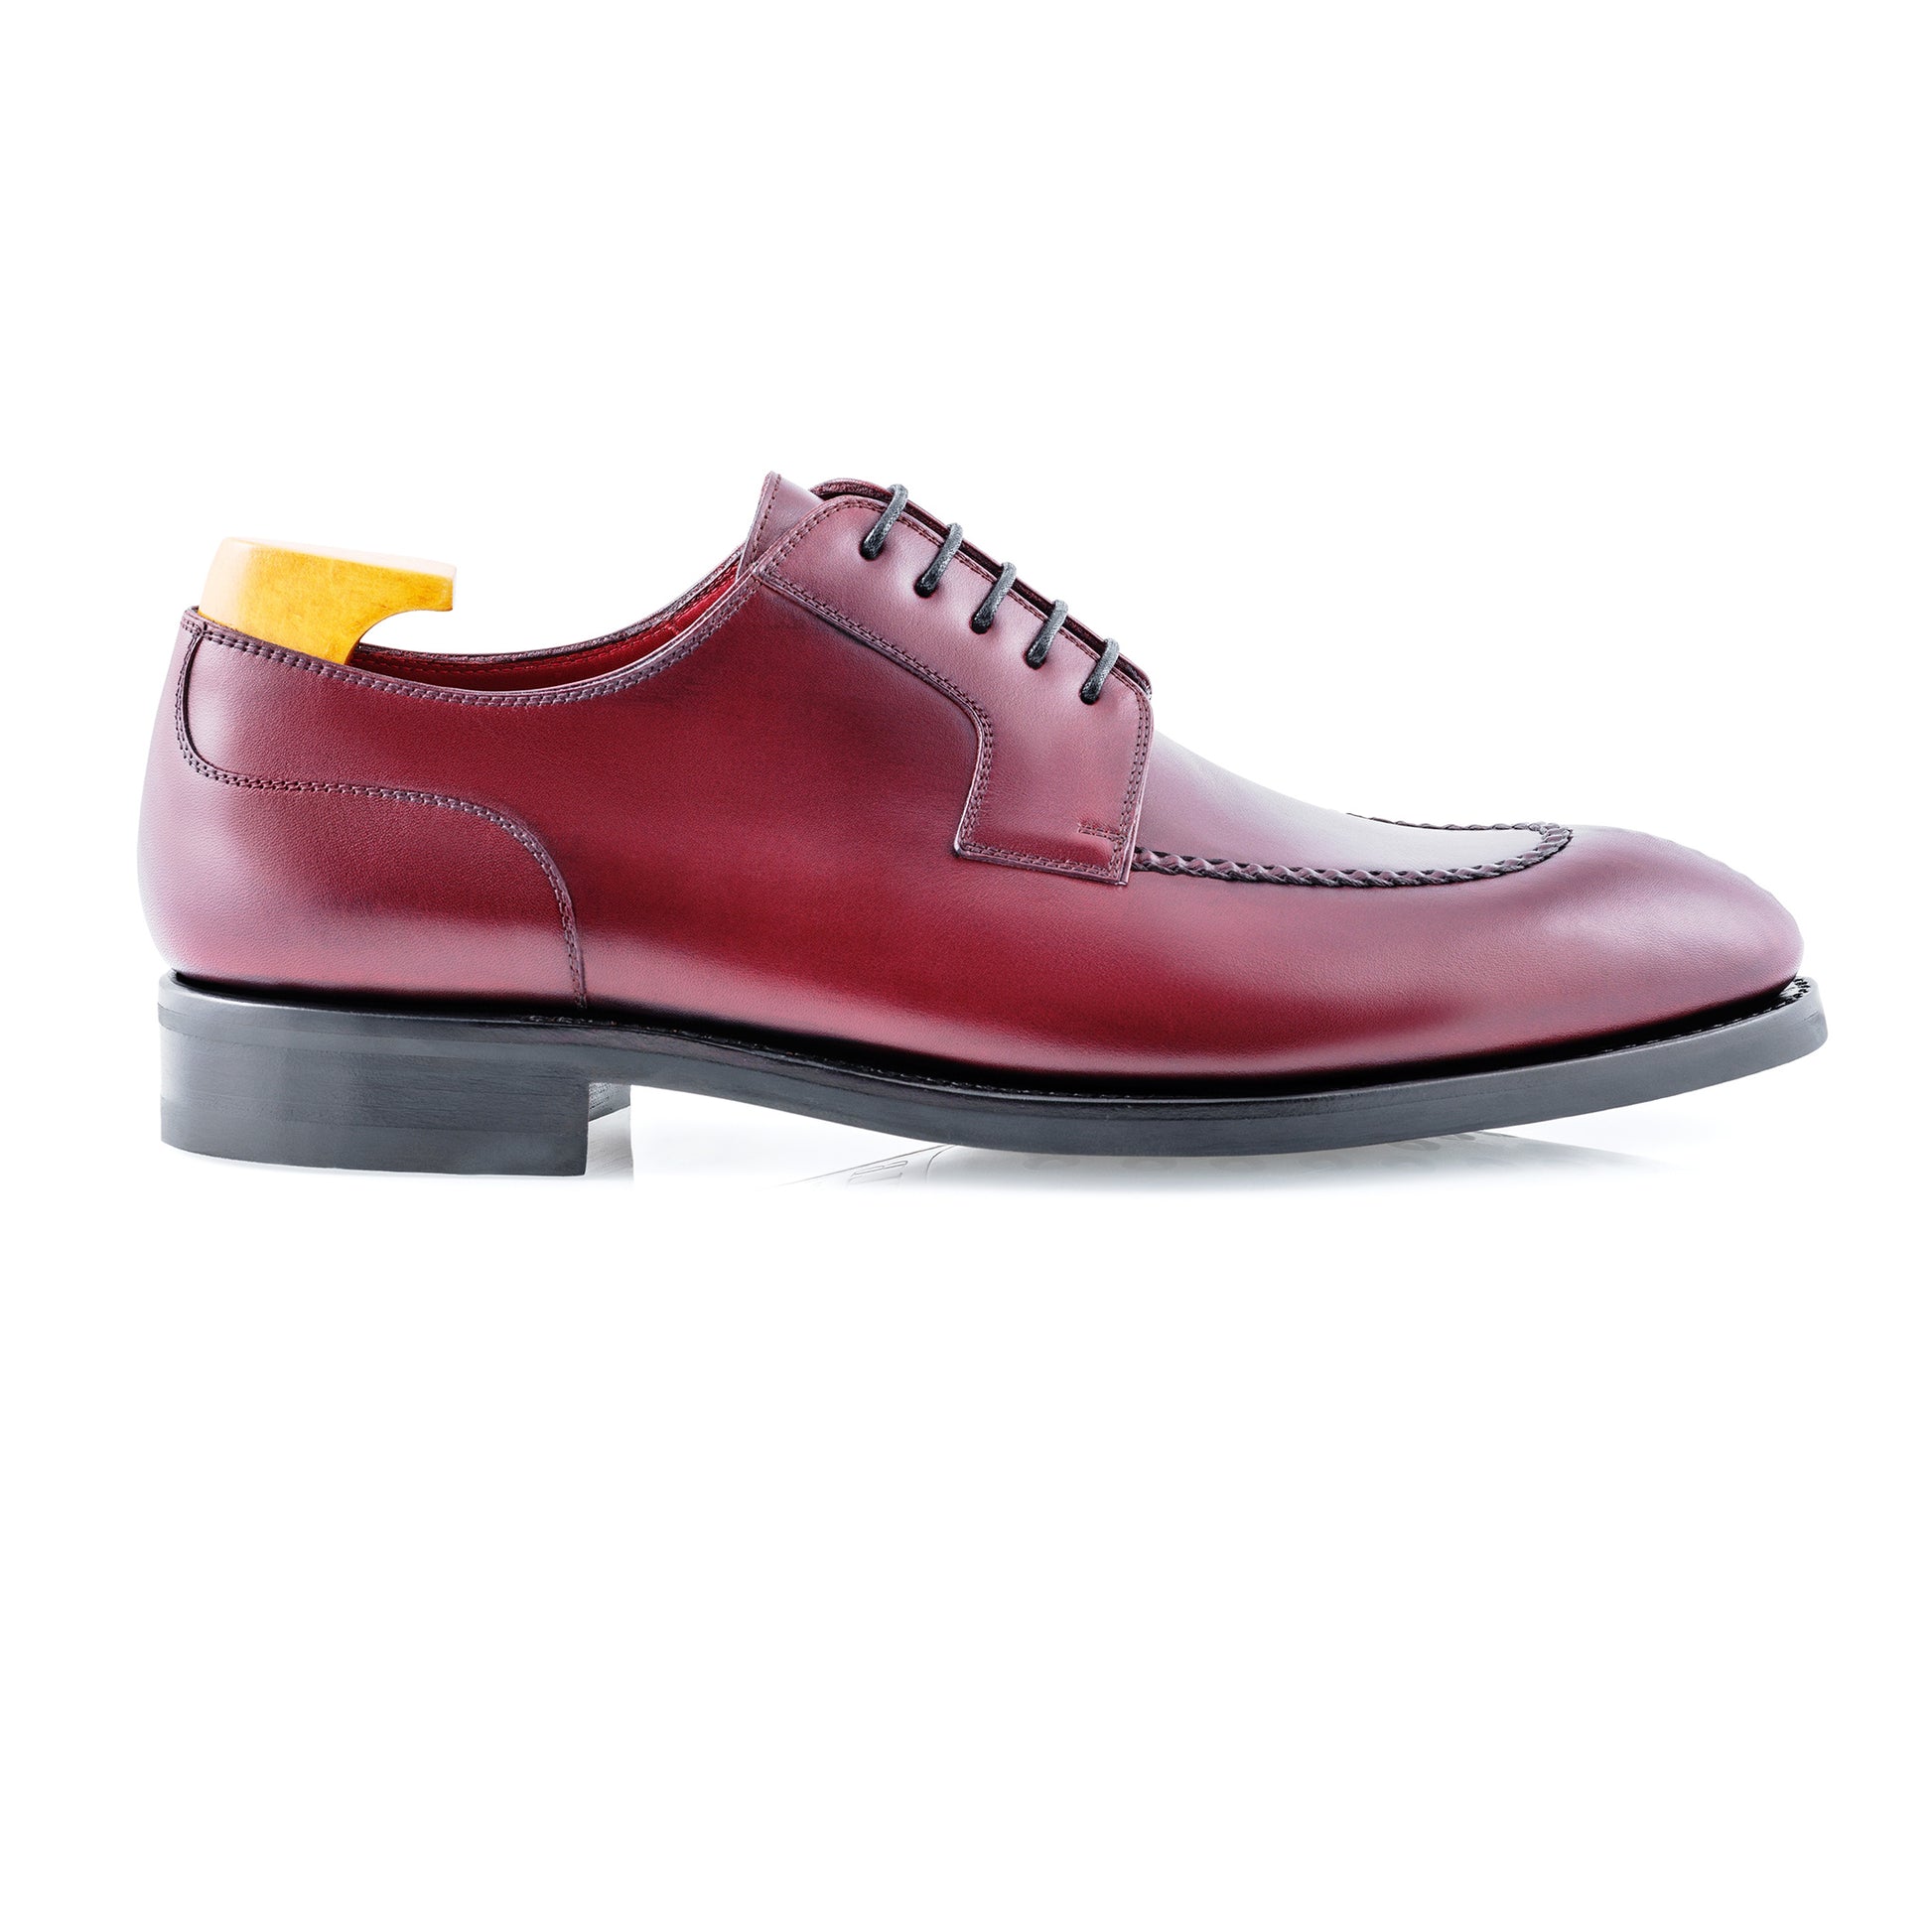 TLB Mallorca leather shoes 538 / OLIVER / VEGANO BURGUNDY